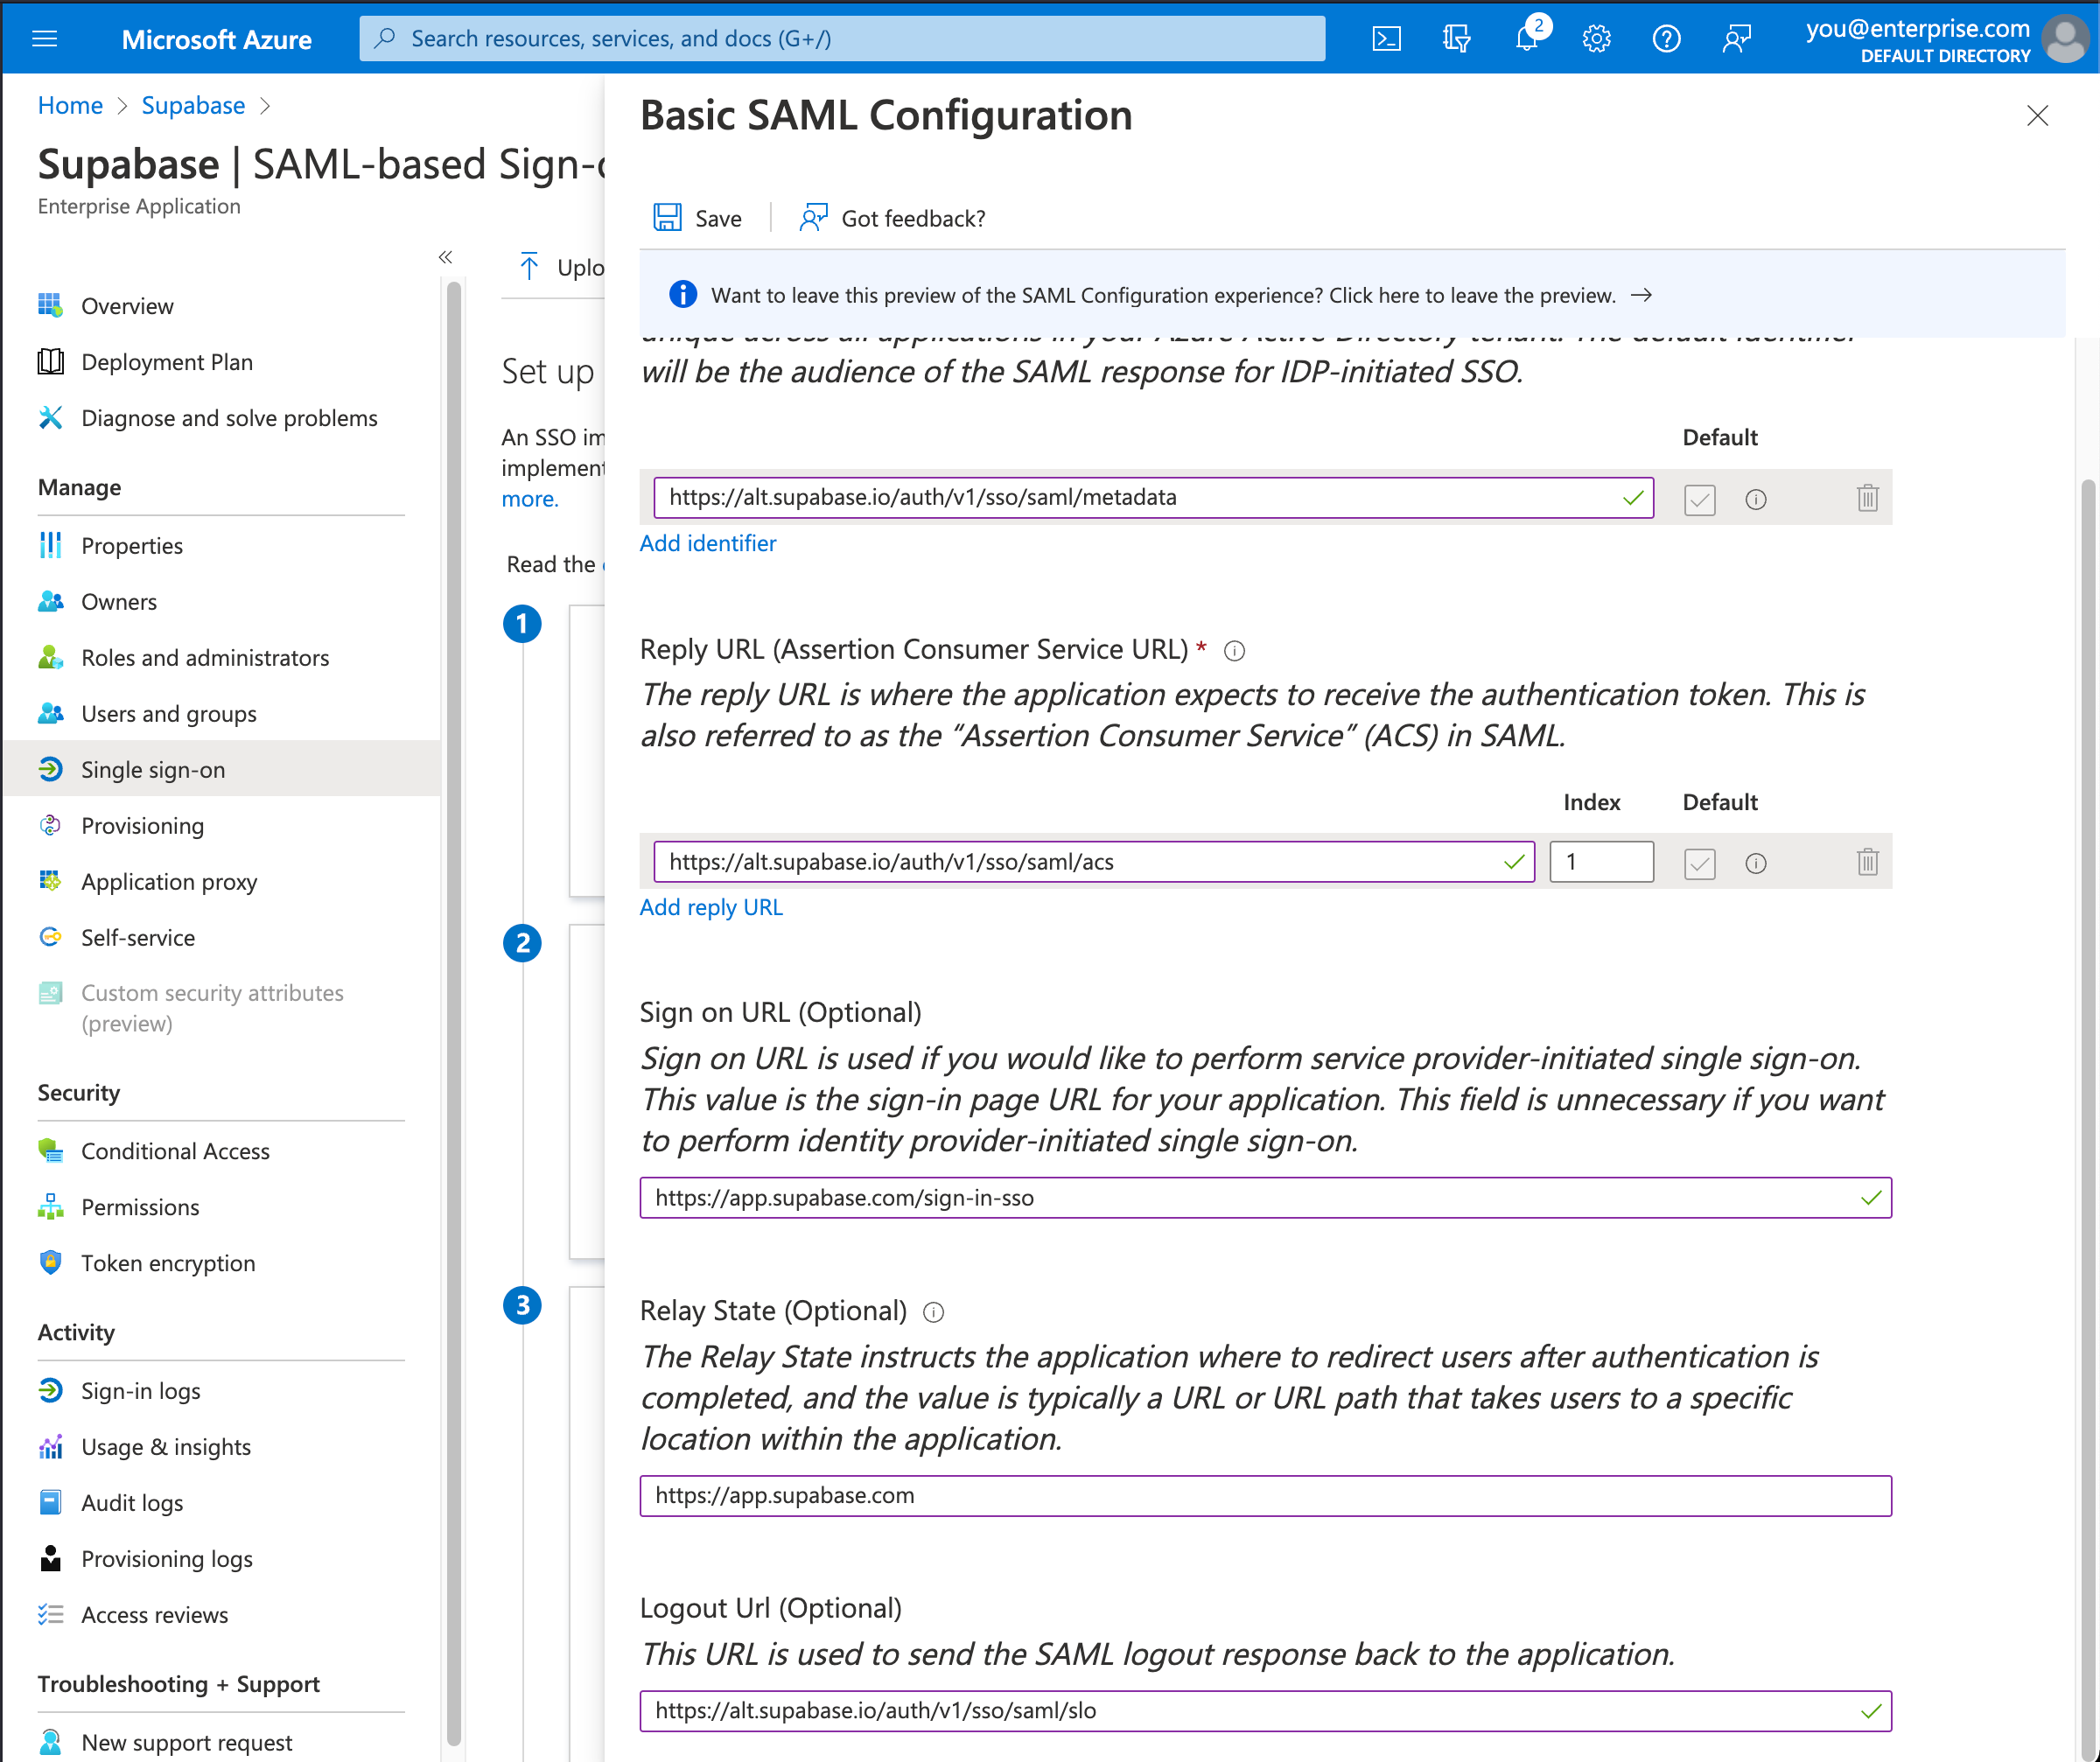 Azure AD console: Supabase application, SAML-based Sign-on screen,
Basic SAML Configuration shown